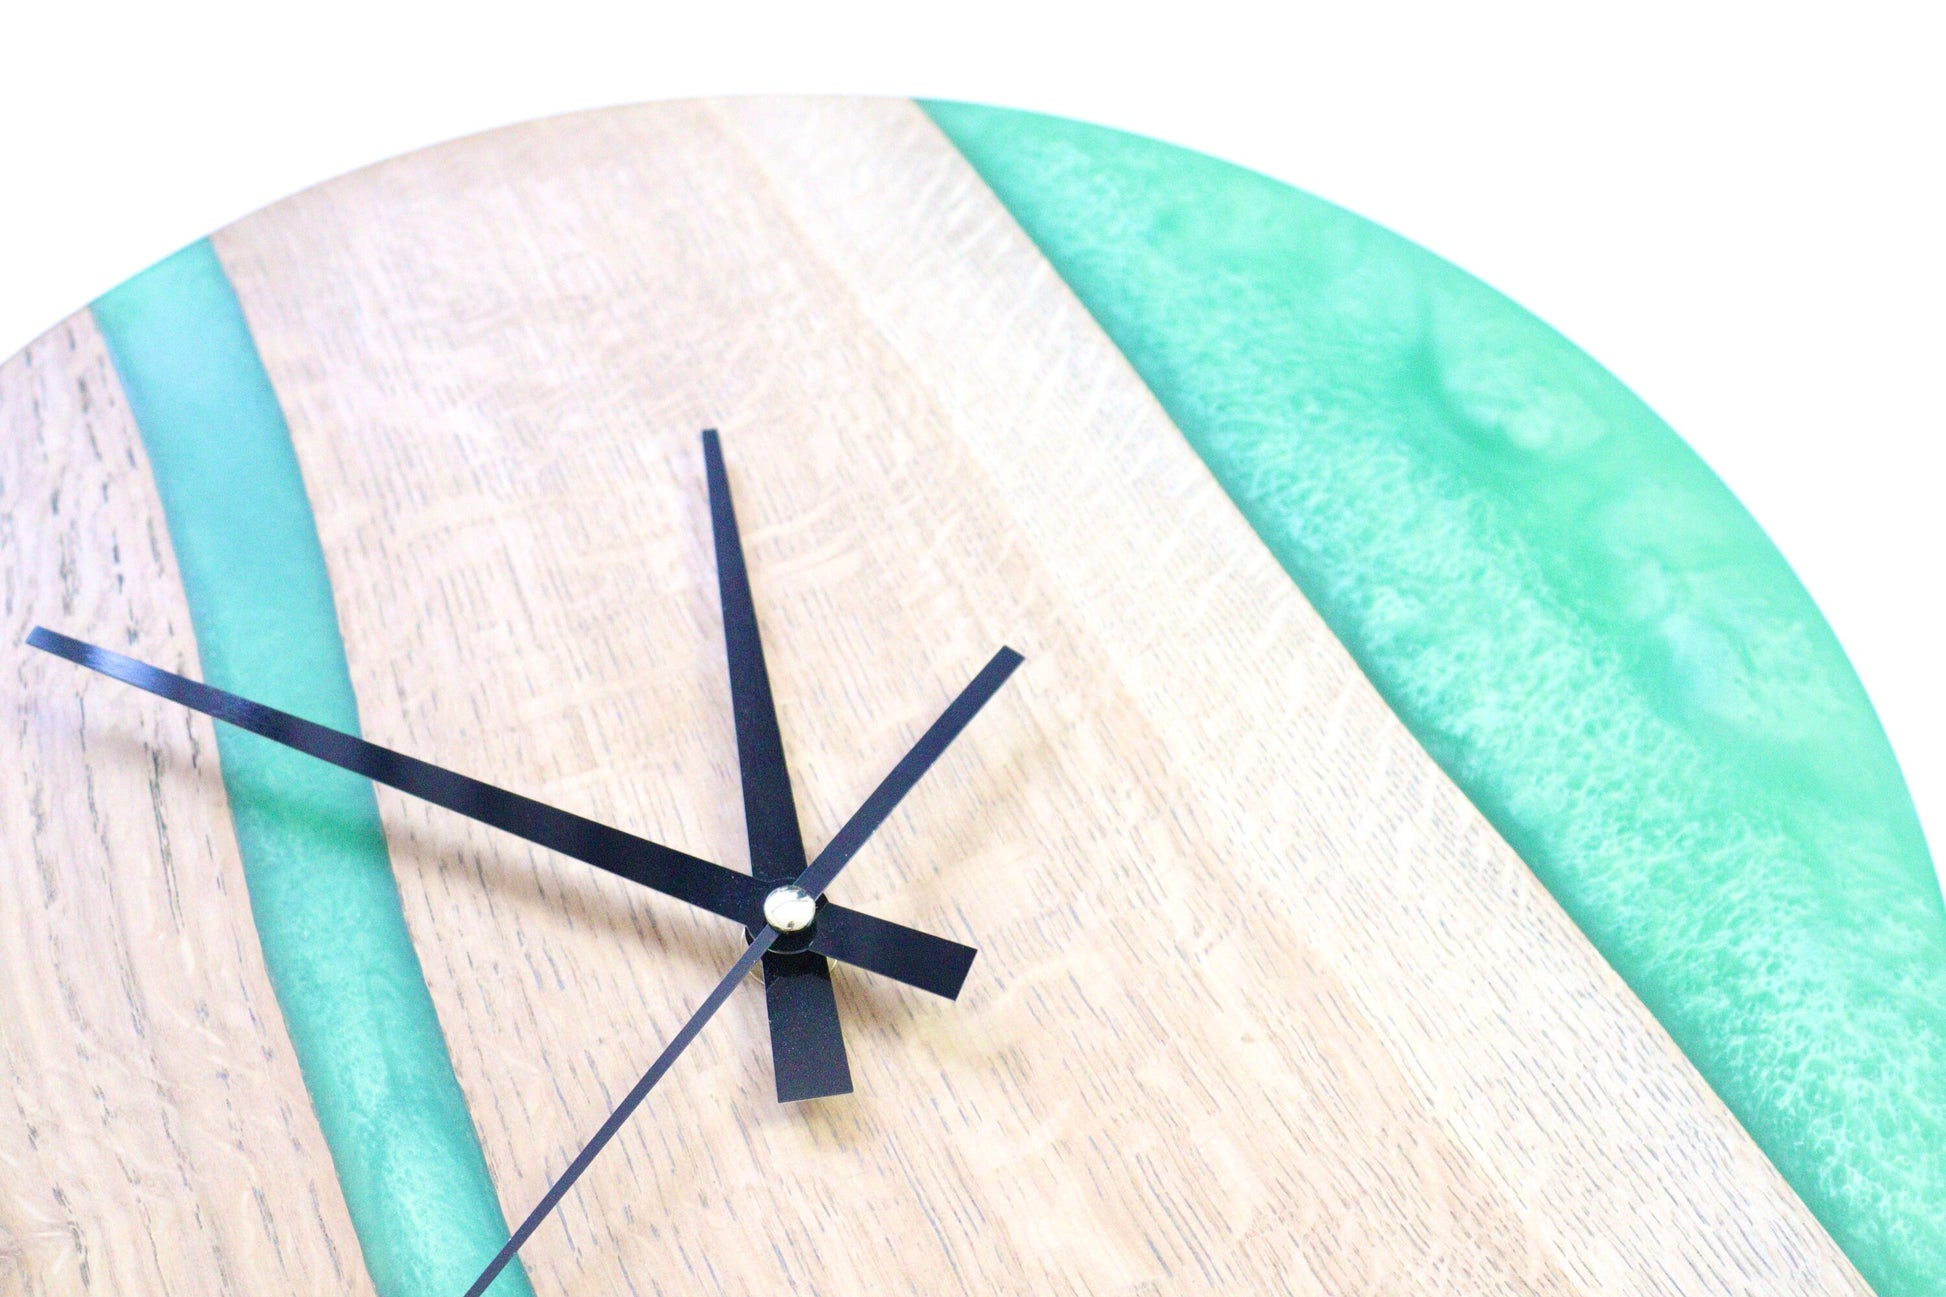 Orologio da parete in legno e resina verde perlata Ø33cm – mushydesign